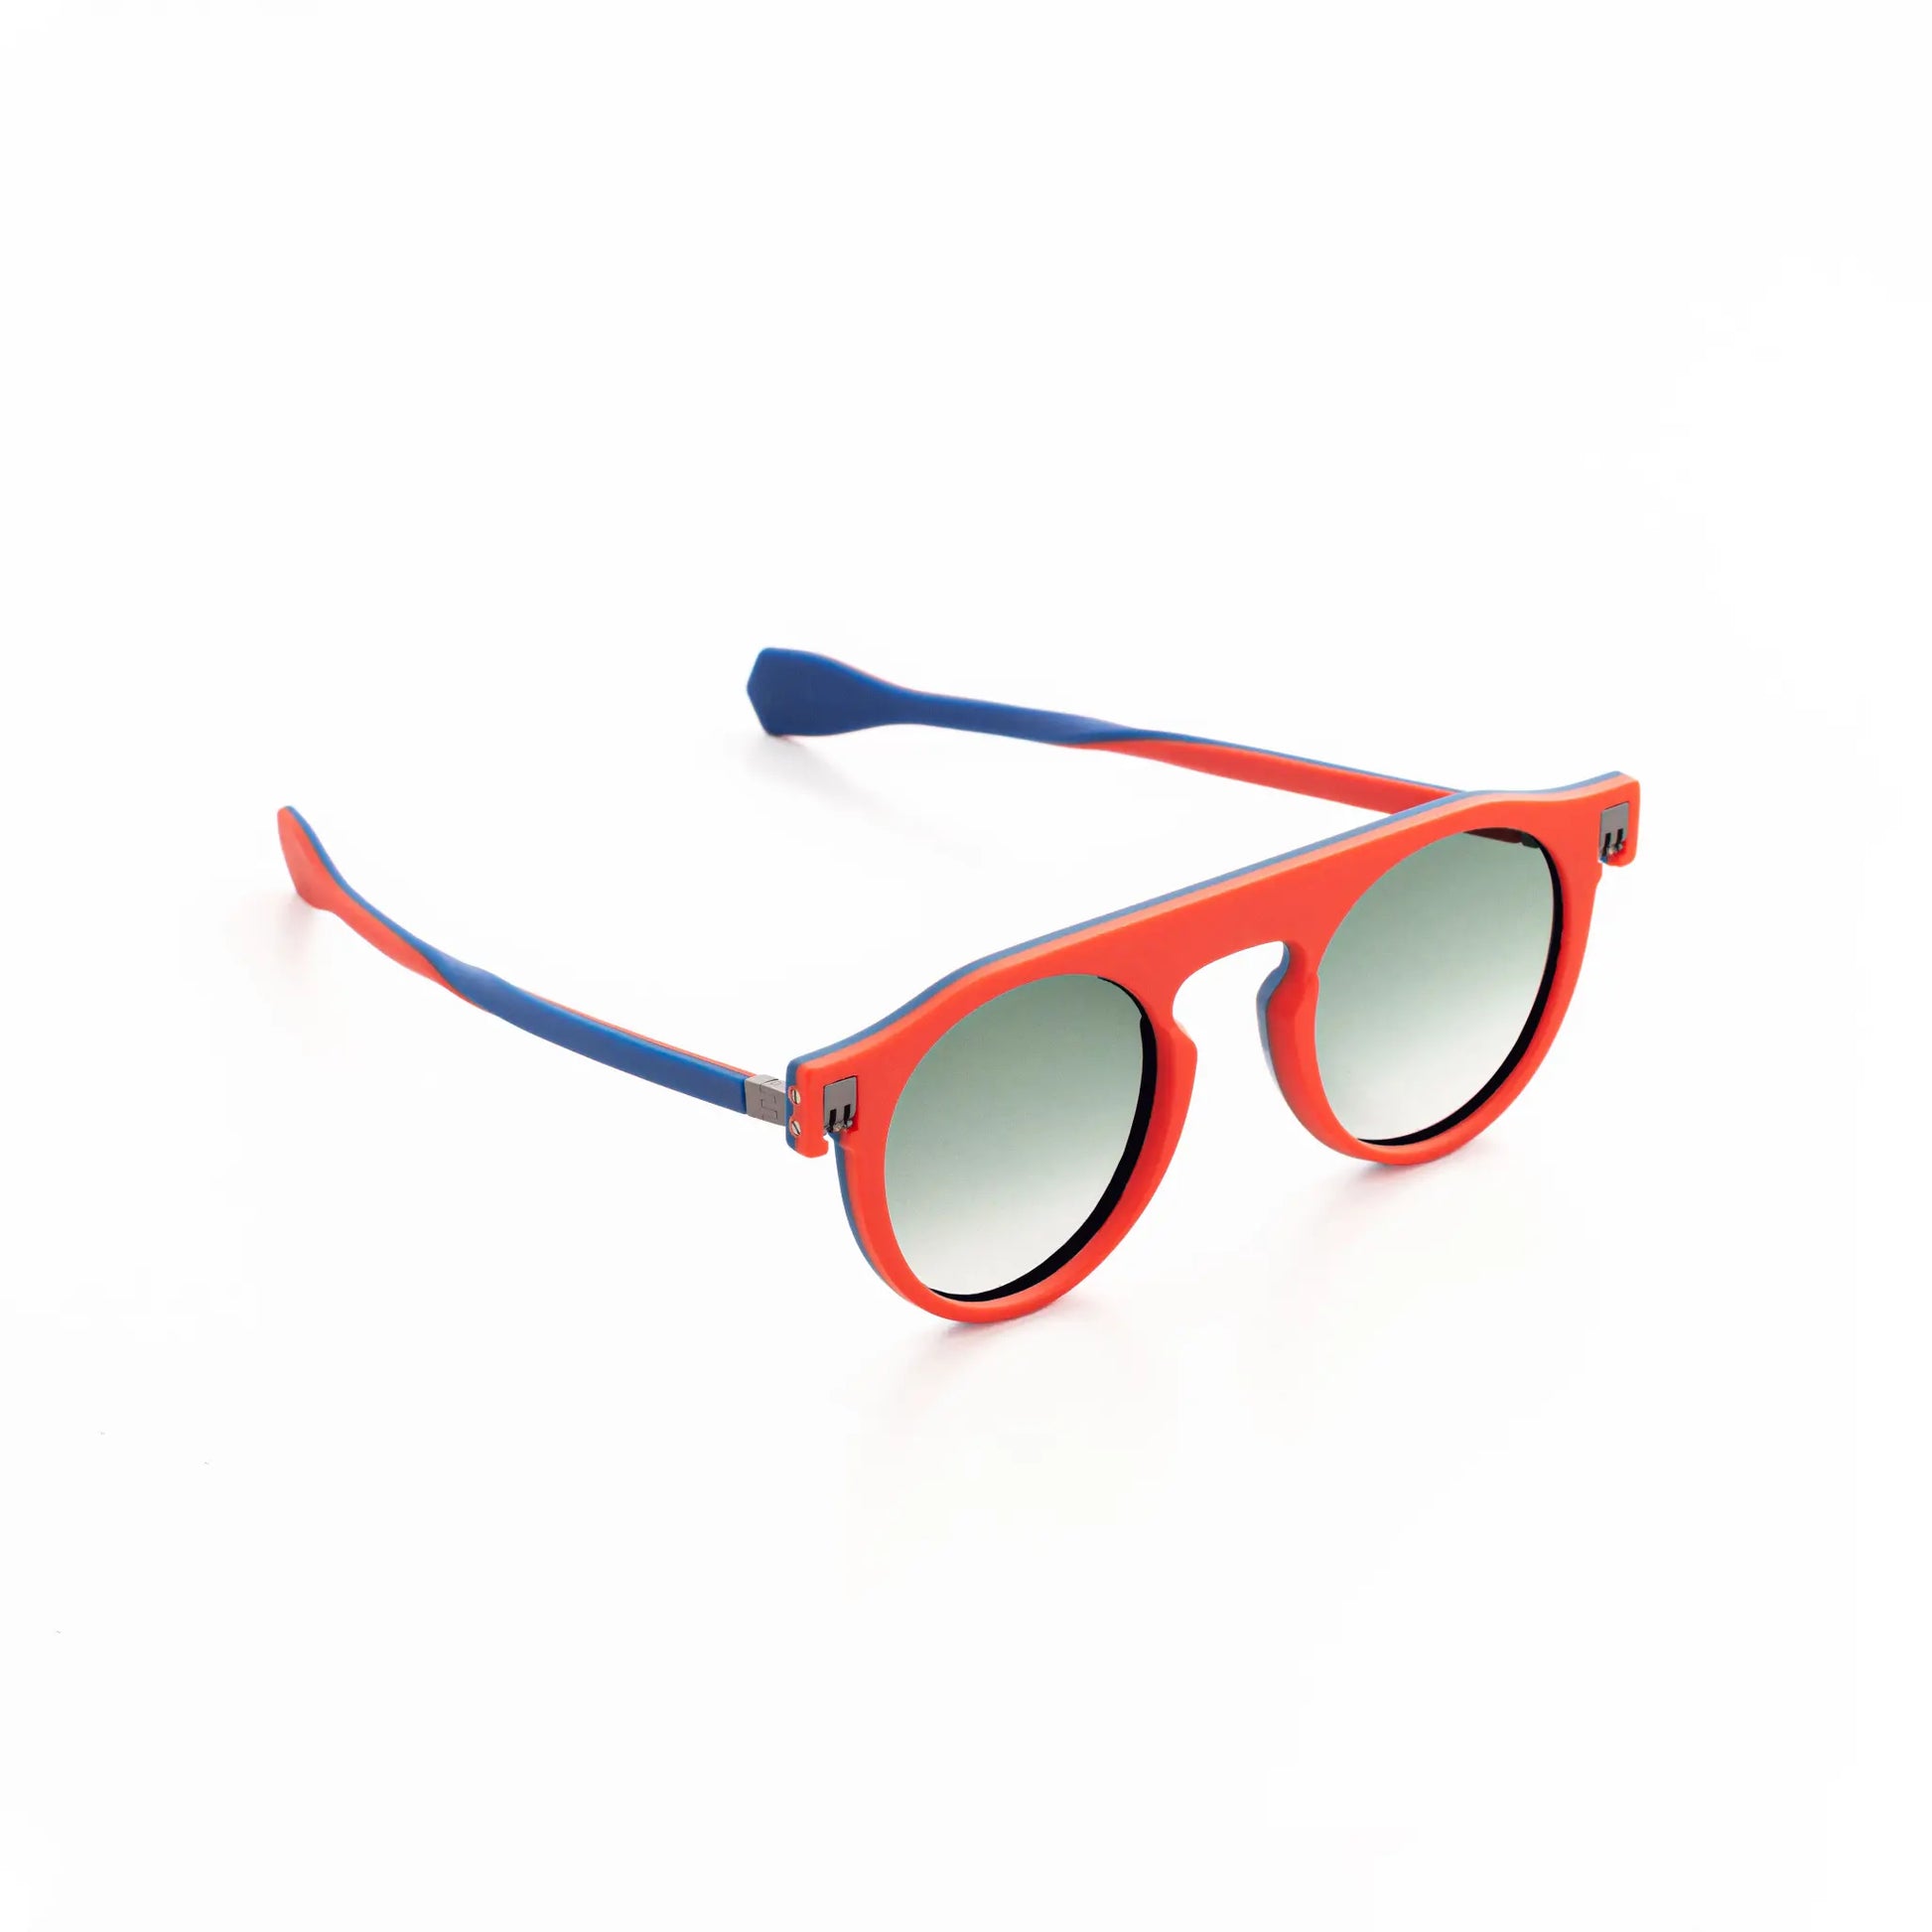 Reverso sunglasses blue & red reversible & ultra light side view 1